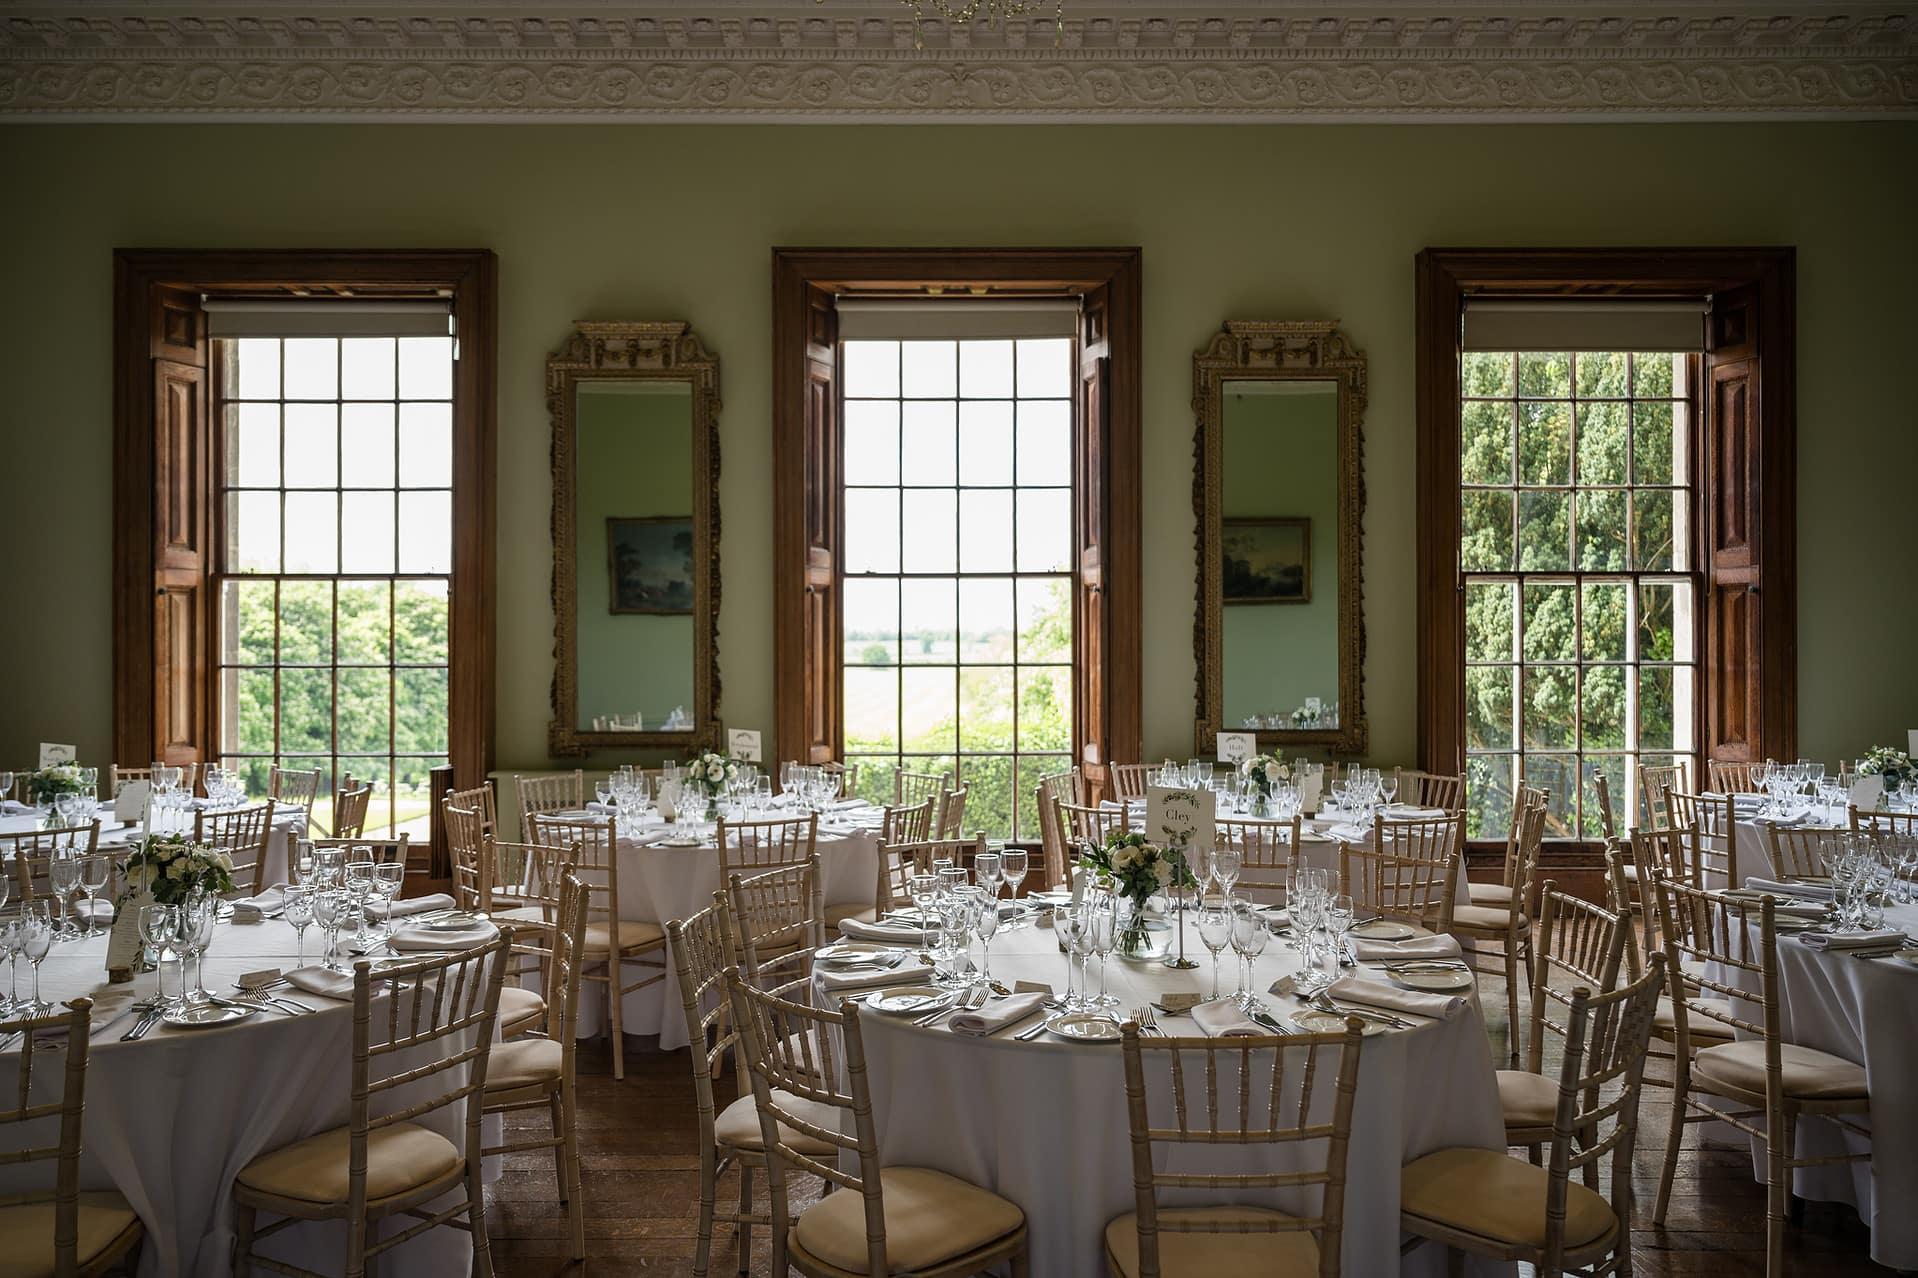 The ballroom at Kelmarsh Hall set for a wedding breakfast